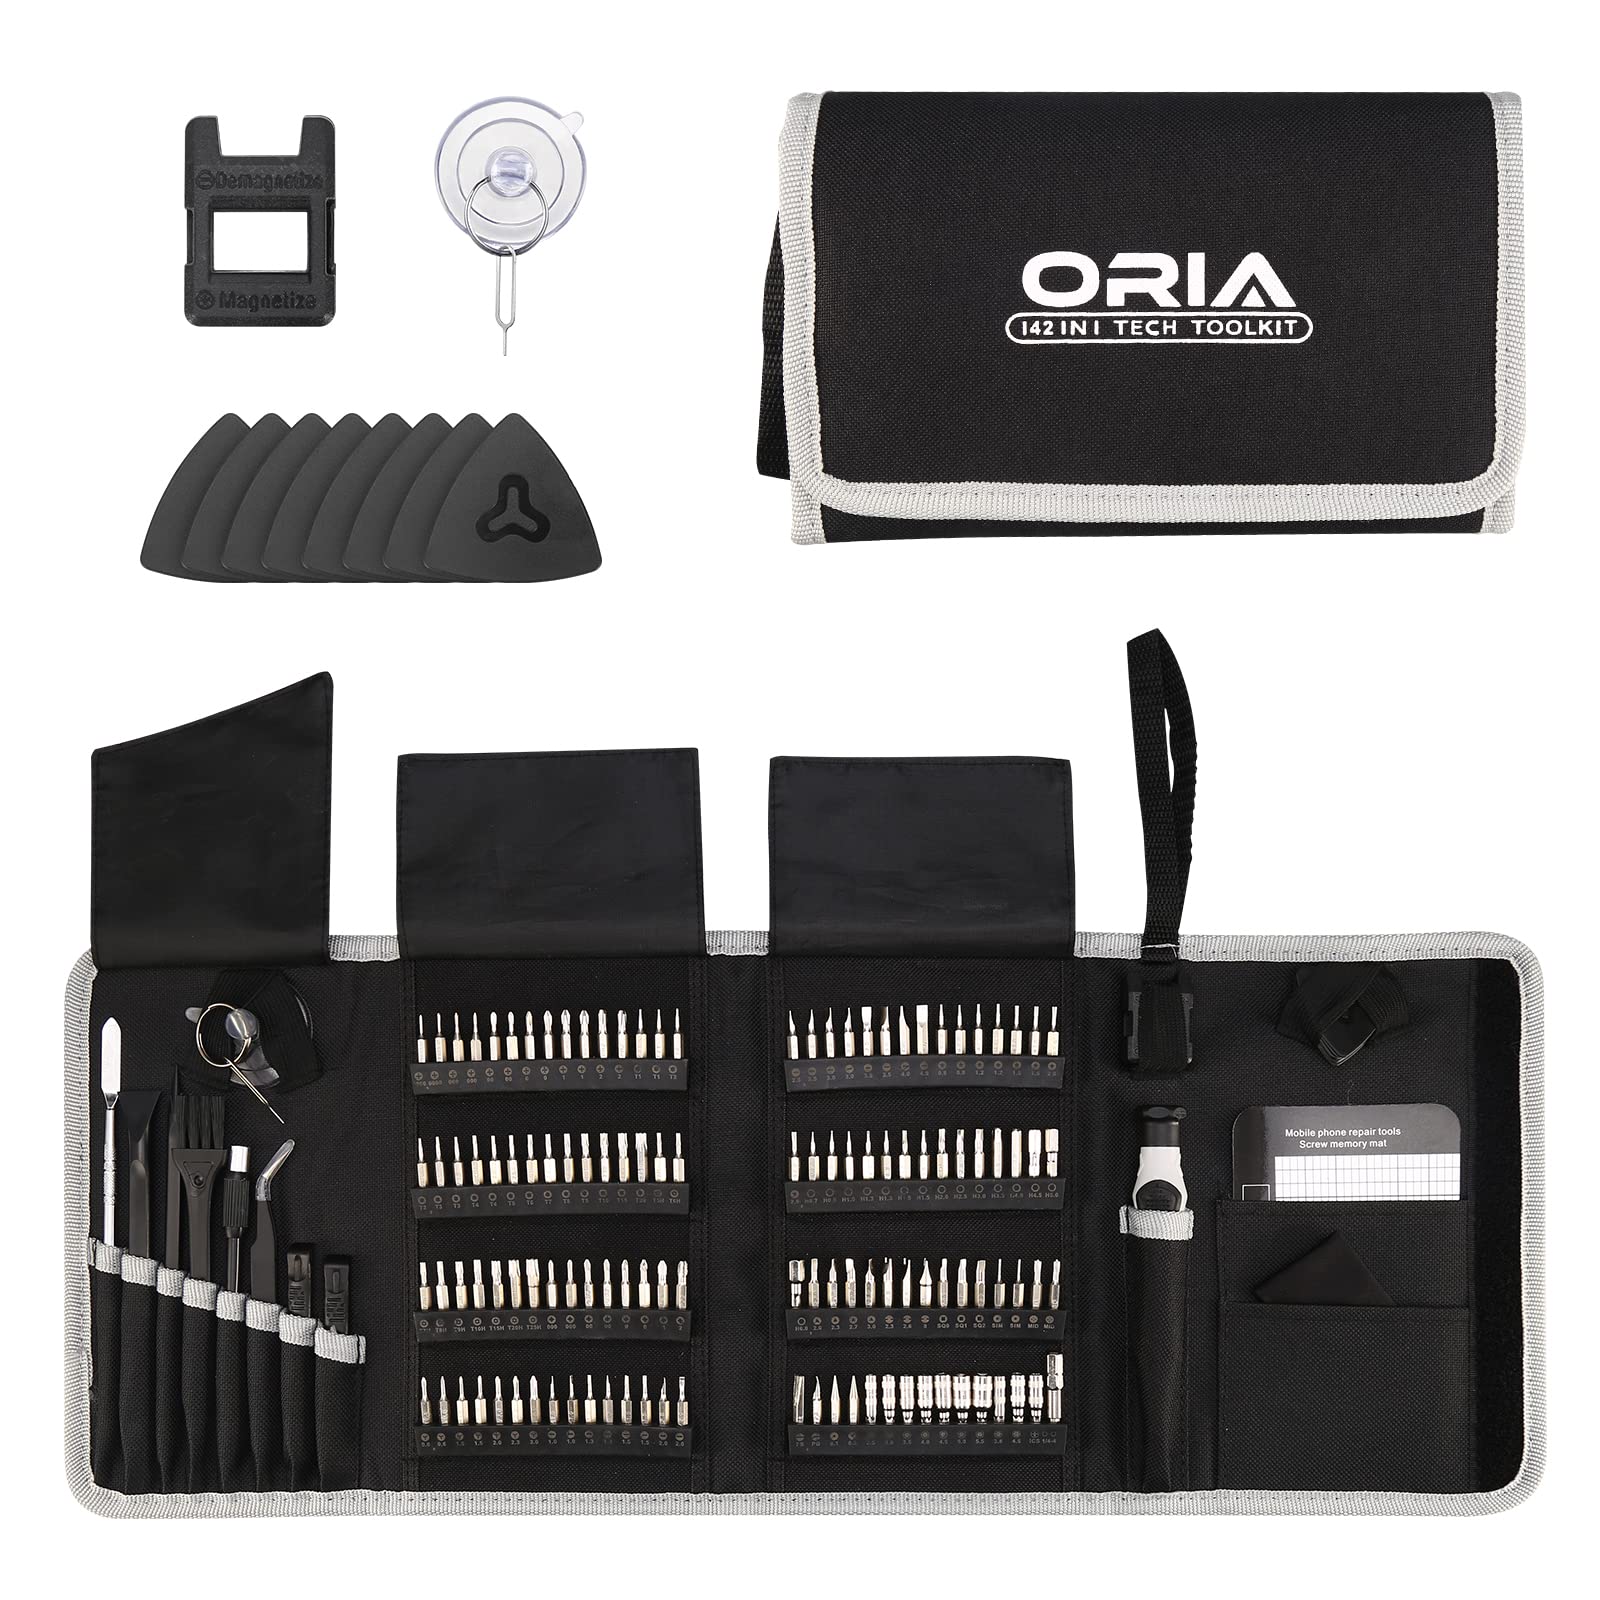 ORIA Precision Screwdriver Set, Magnetic Repair Tool Kit, 142 in 1 Magnetic Driver Kit with 120 Screwdrivers Bits, Portable Bag 